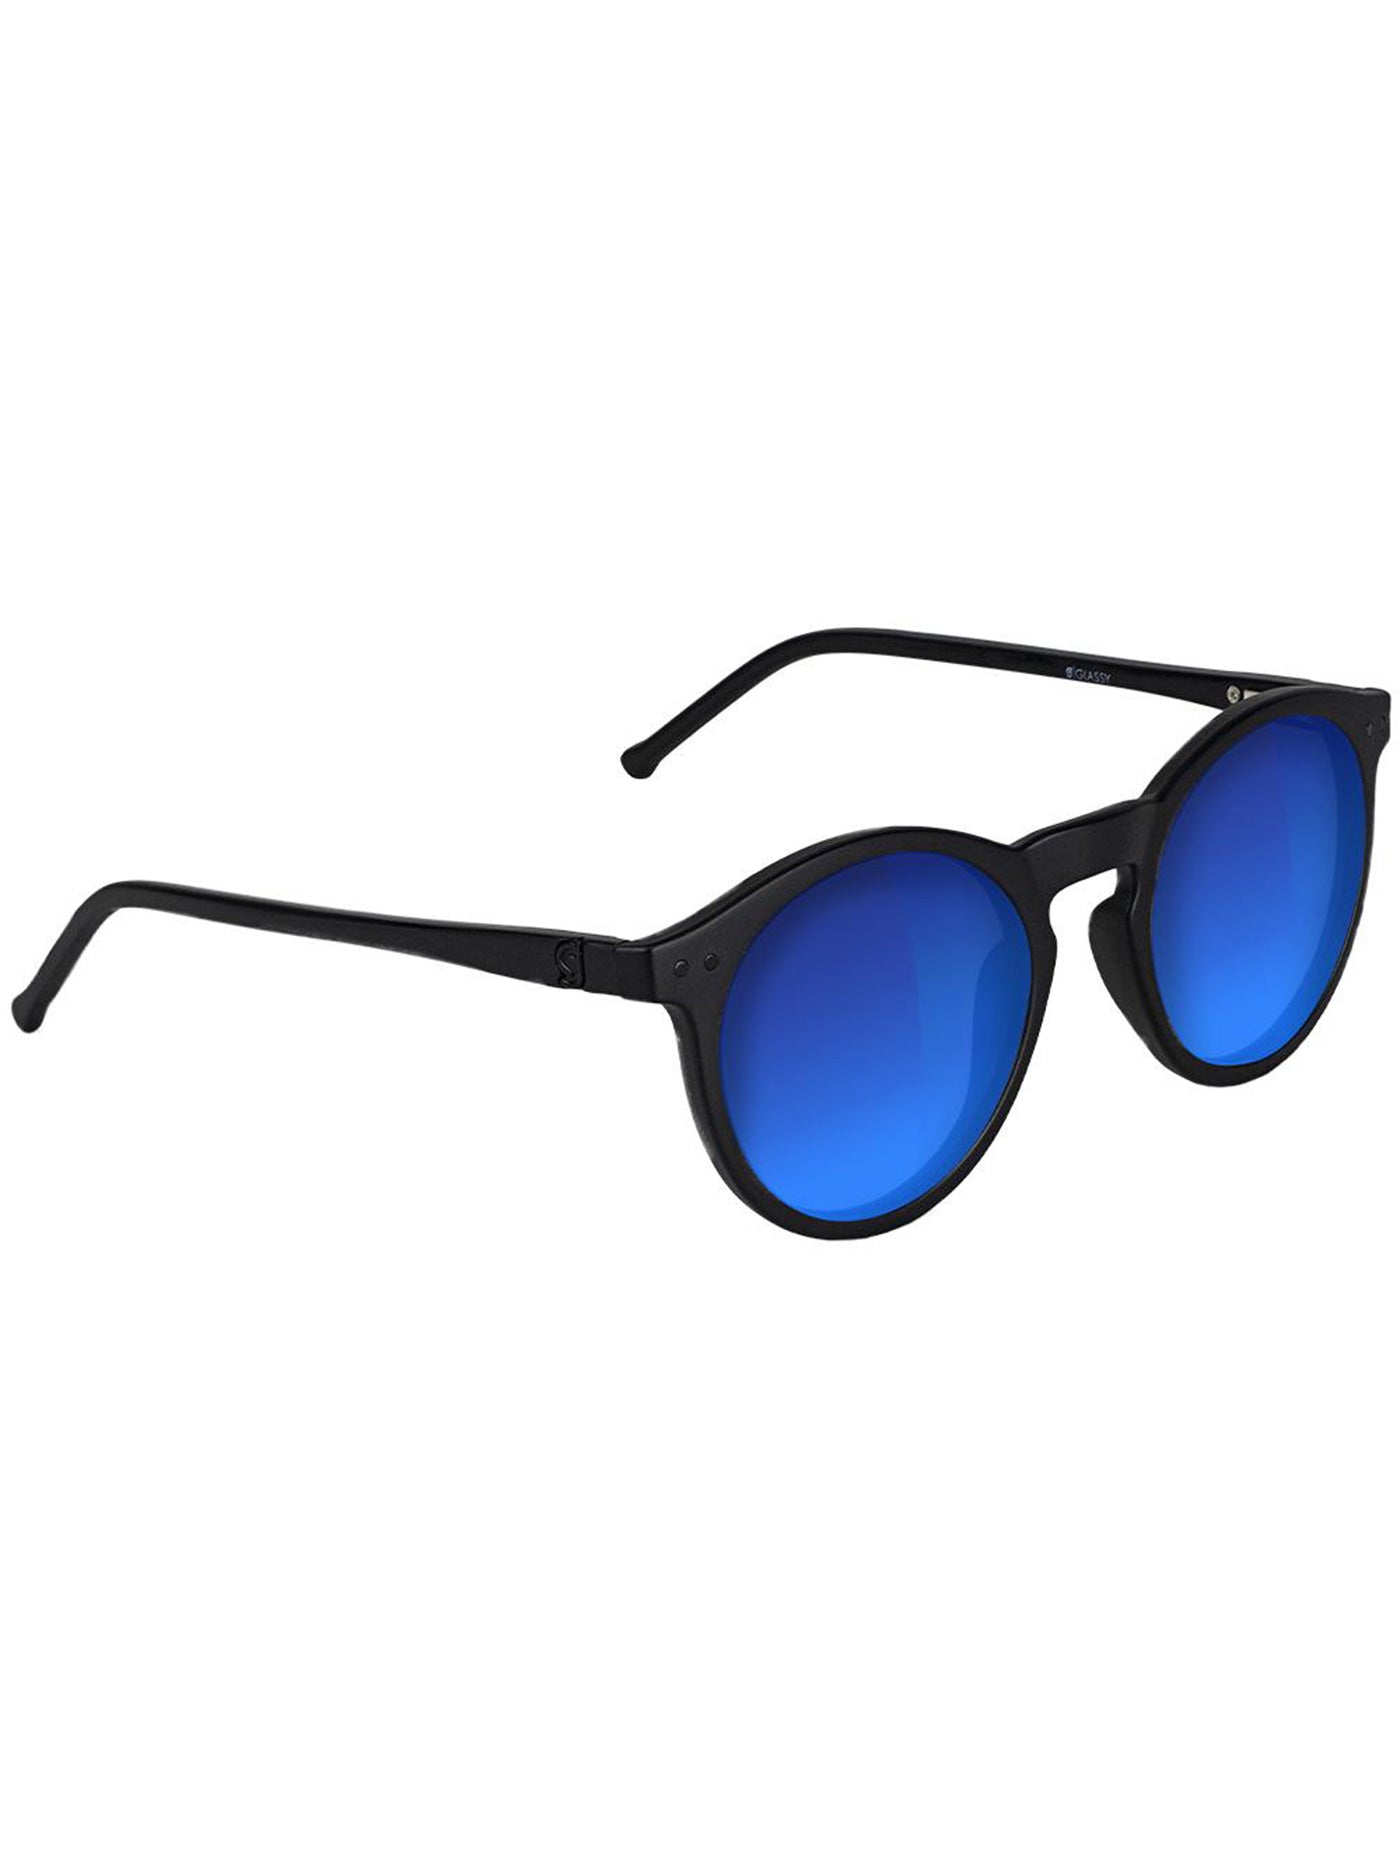 Glassy Apolo Premium Polarized Sunglasses